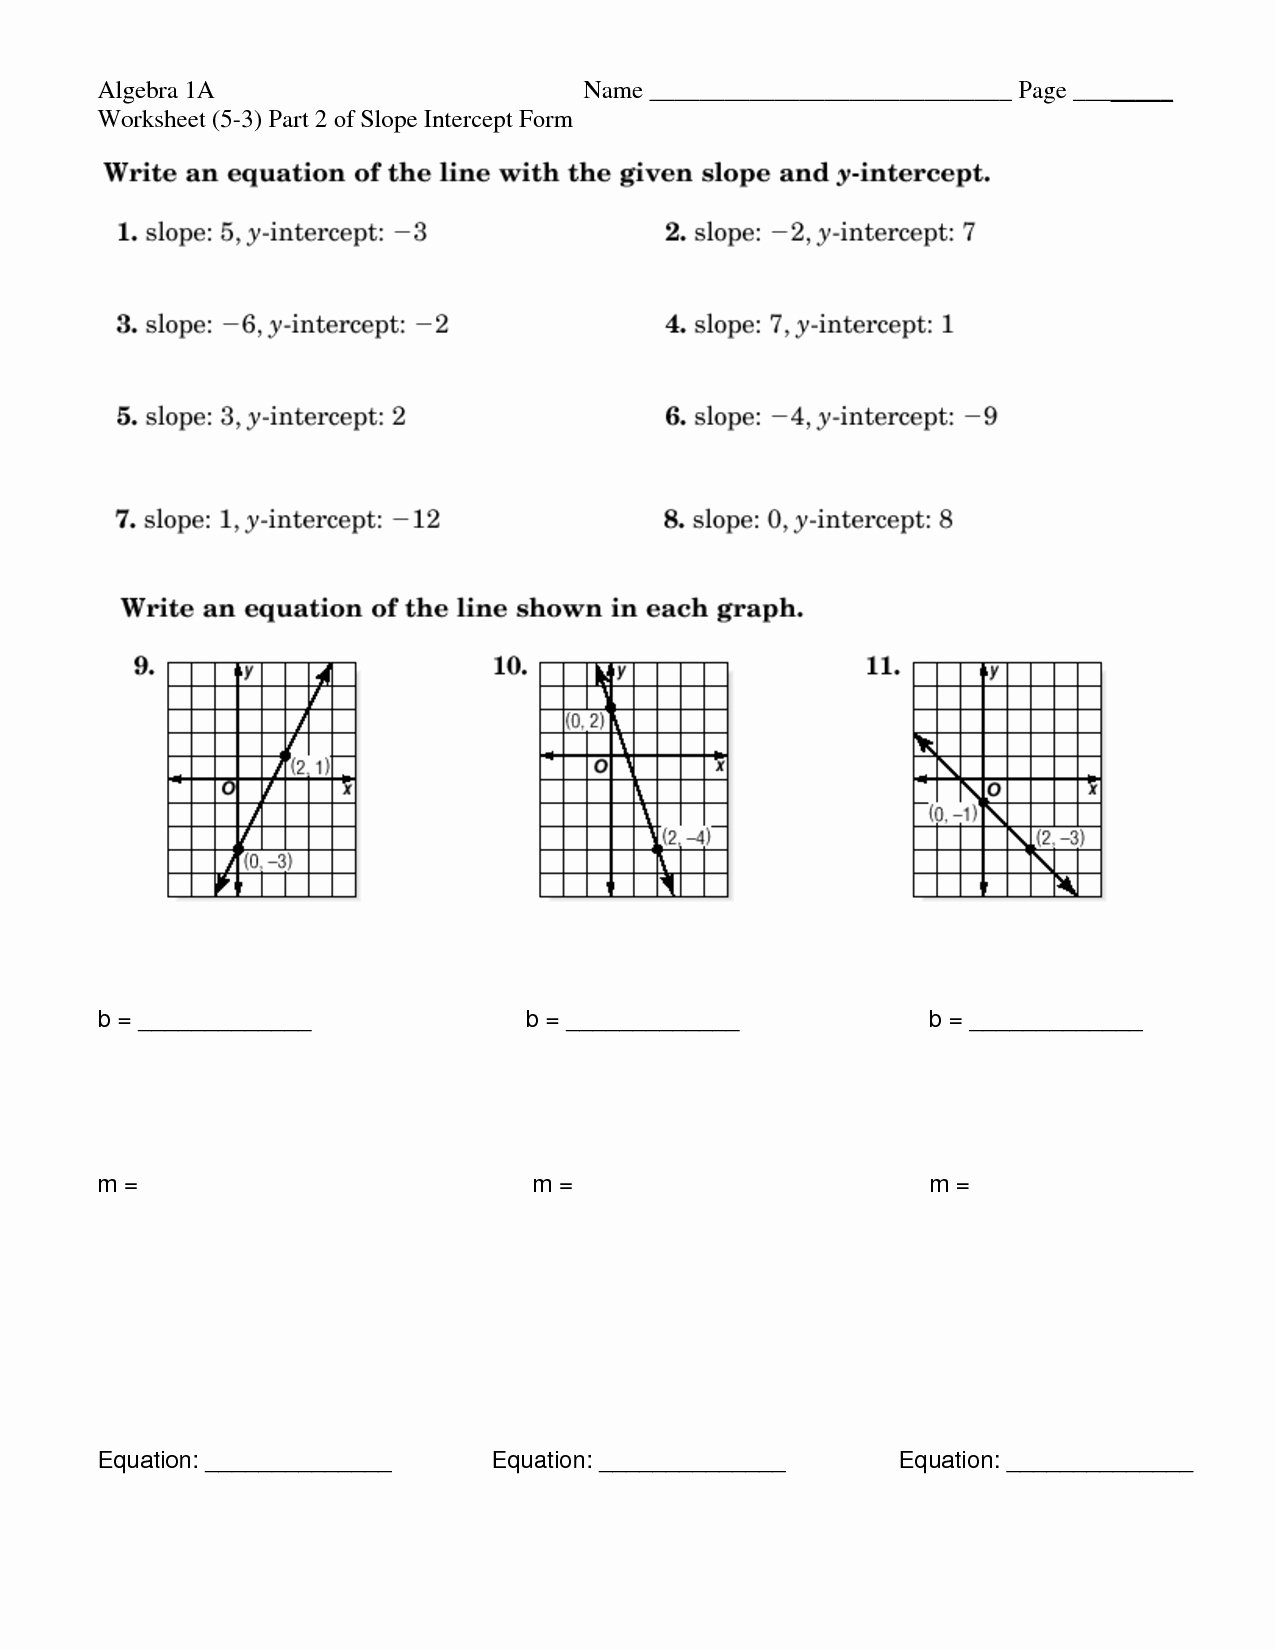 Algebra 1 Worksheets Slope Intercept Form  Justswimfl With Slope Intercept Form Worksheet With Answers